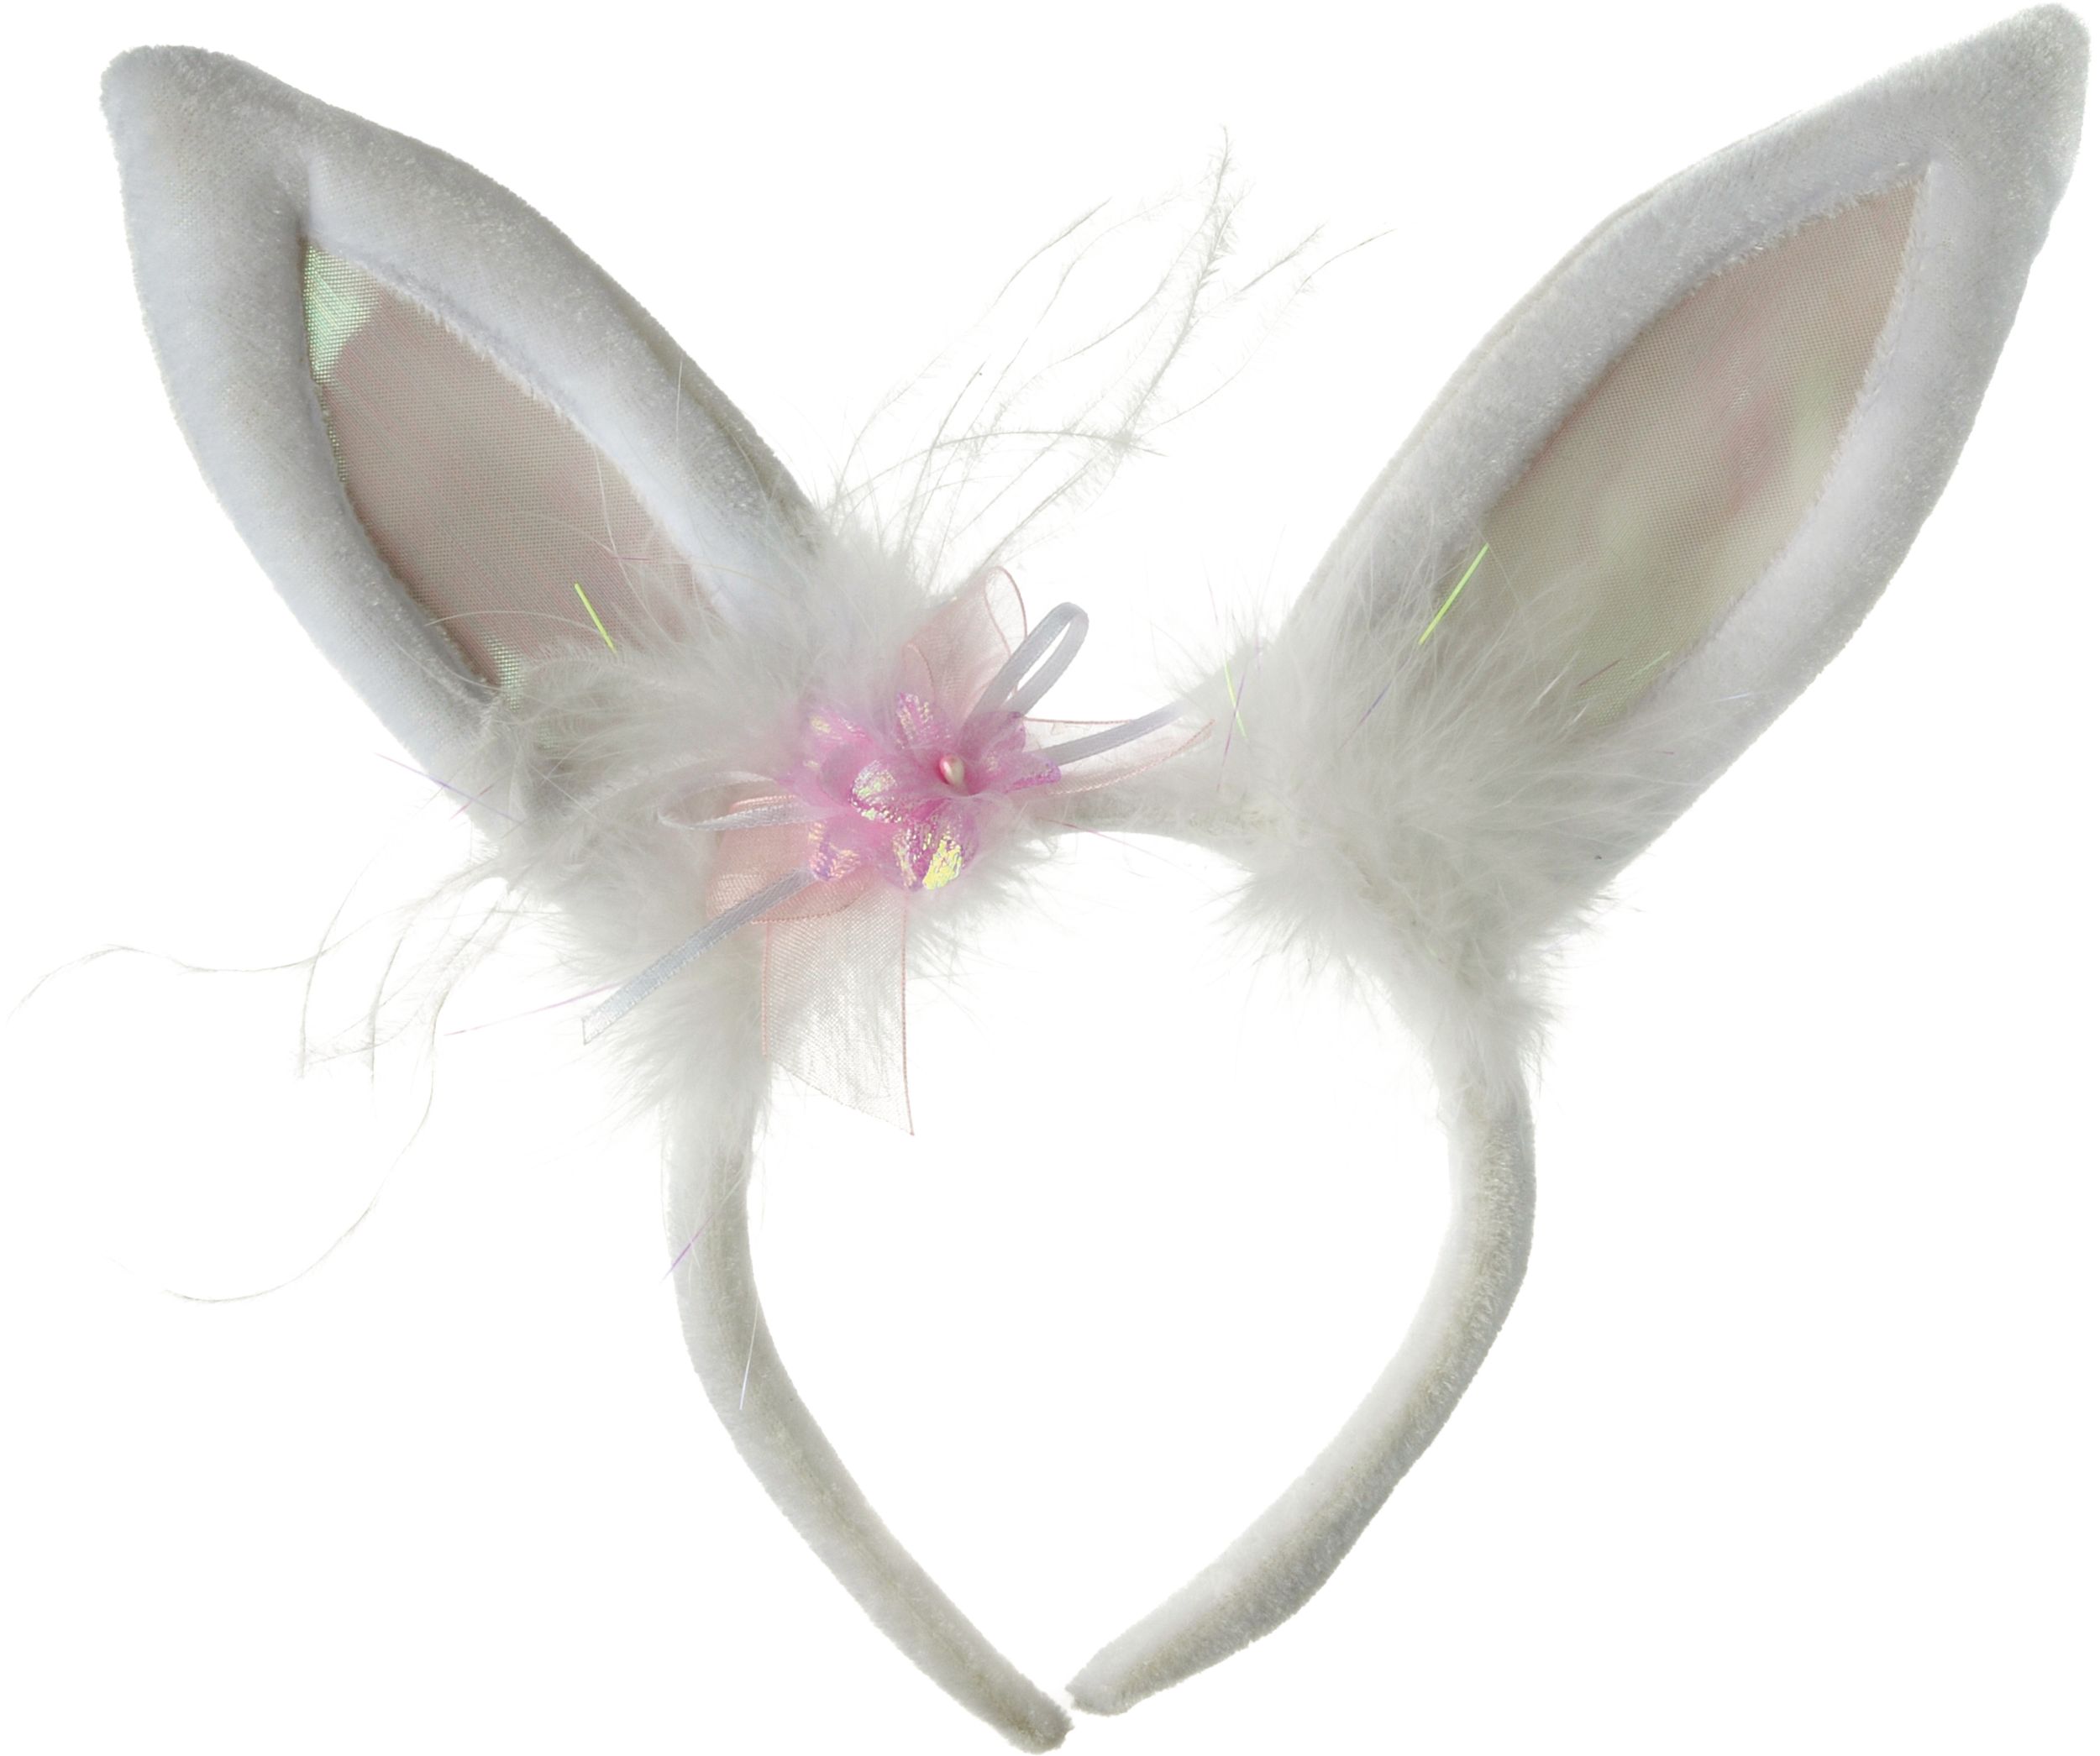 Marabou Bunny Ears Headband, Black, One Size, Wearable Costume Accessory  for Halloween